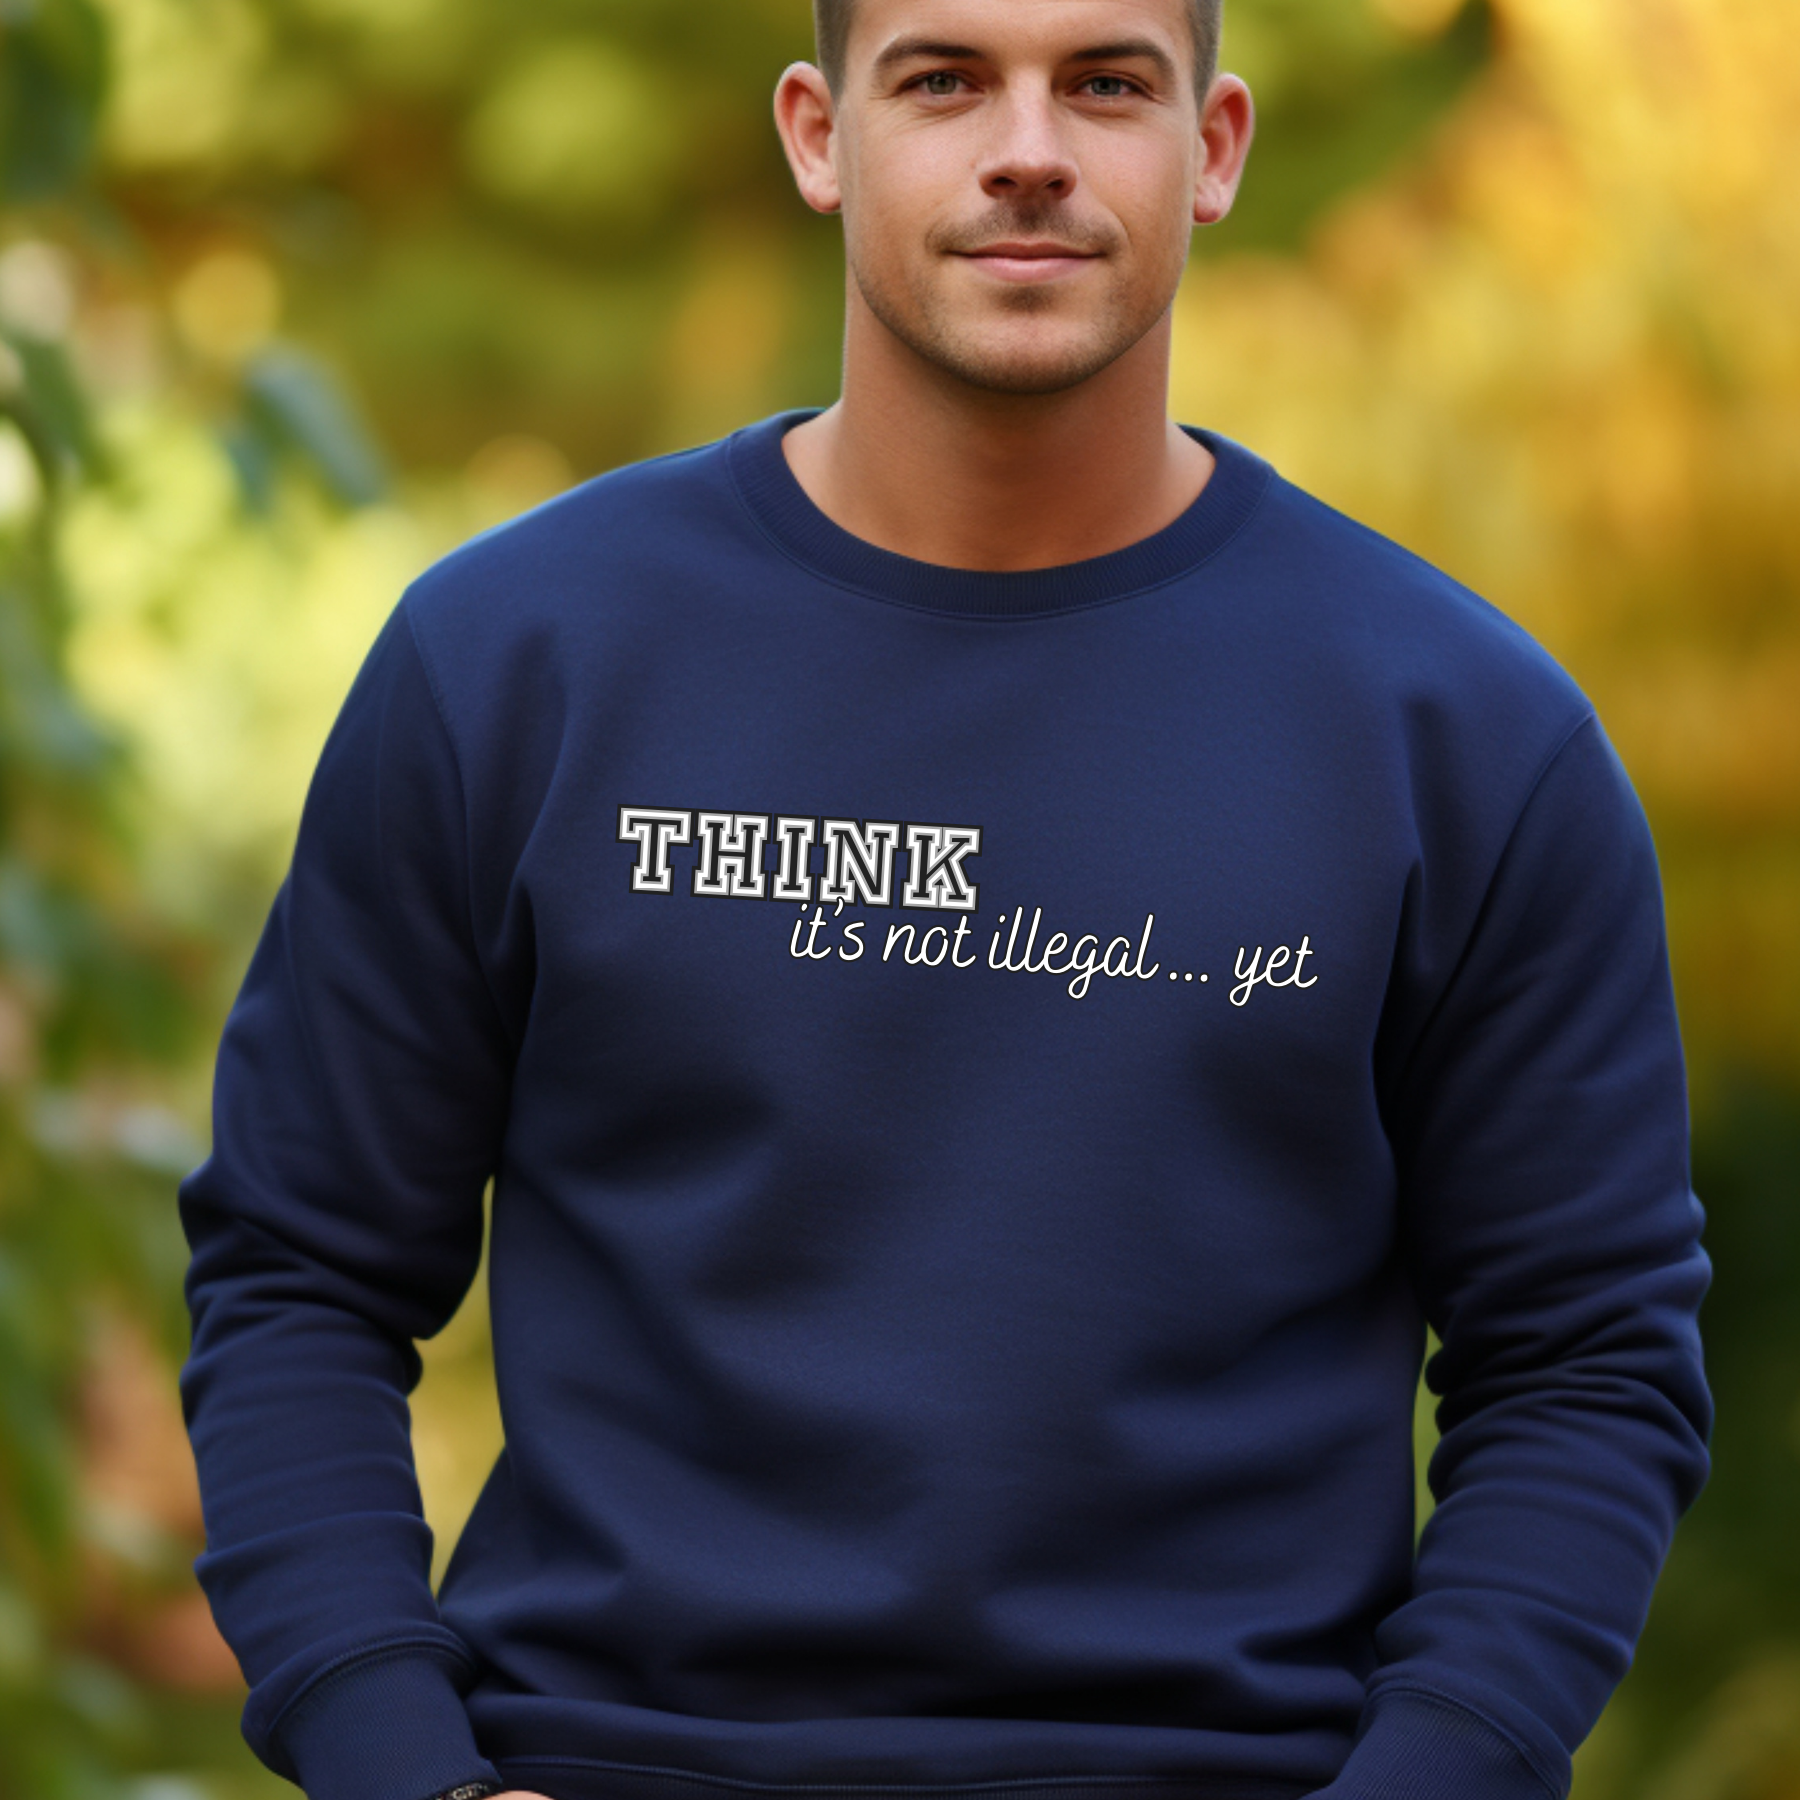 Men's 'Think... It's Not Illegal Yet' Graphic Sweatshirt - Eddy and Rita